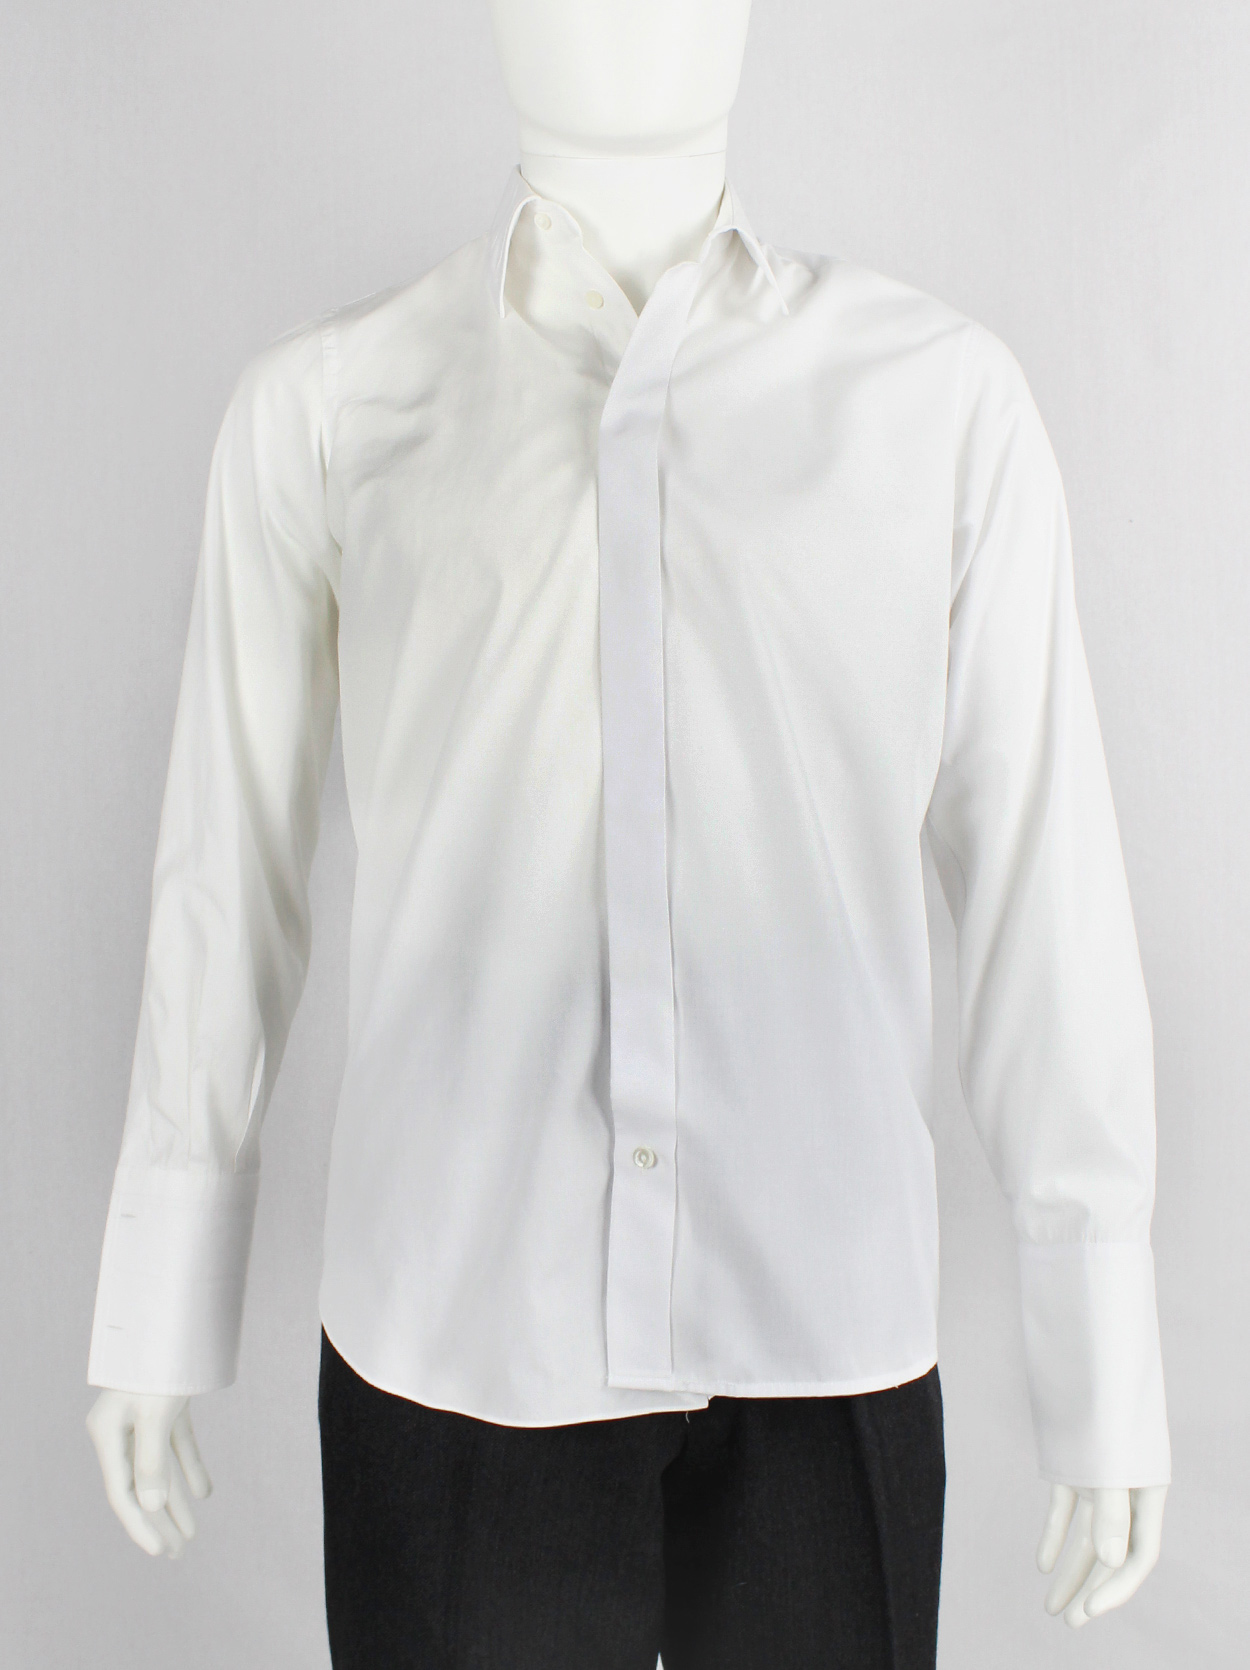 Maison Martin Margiela artisanal white shirt made of two different ...